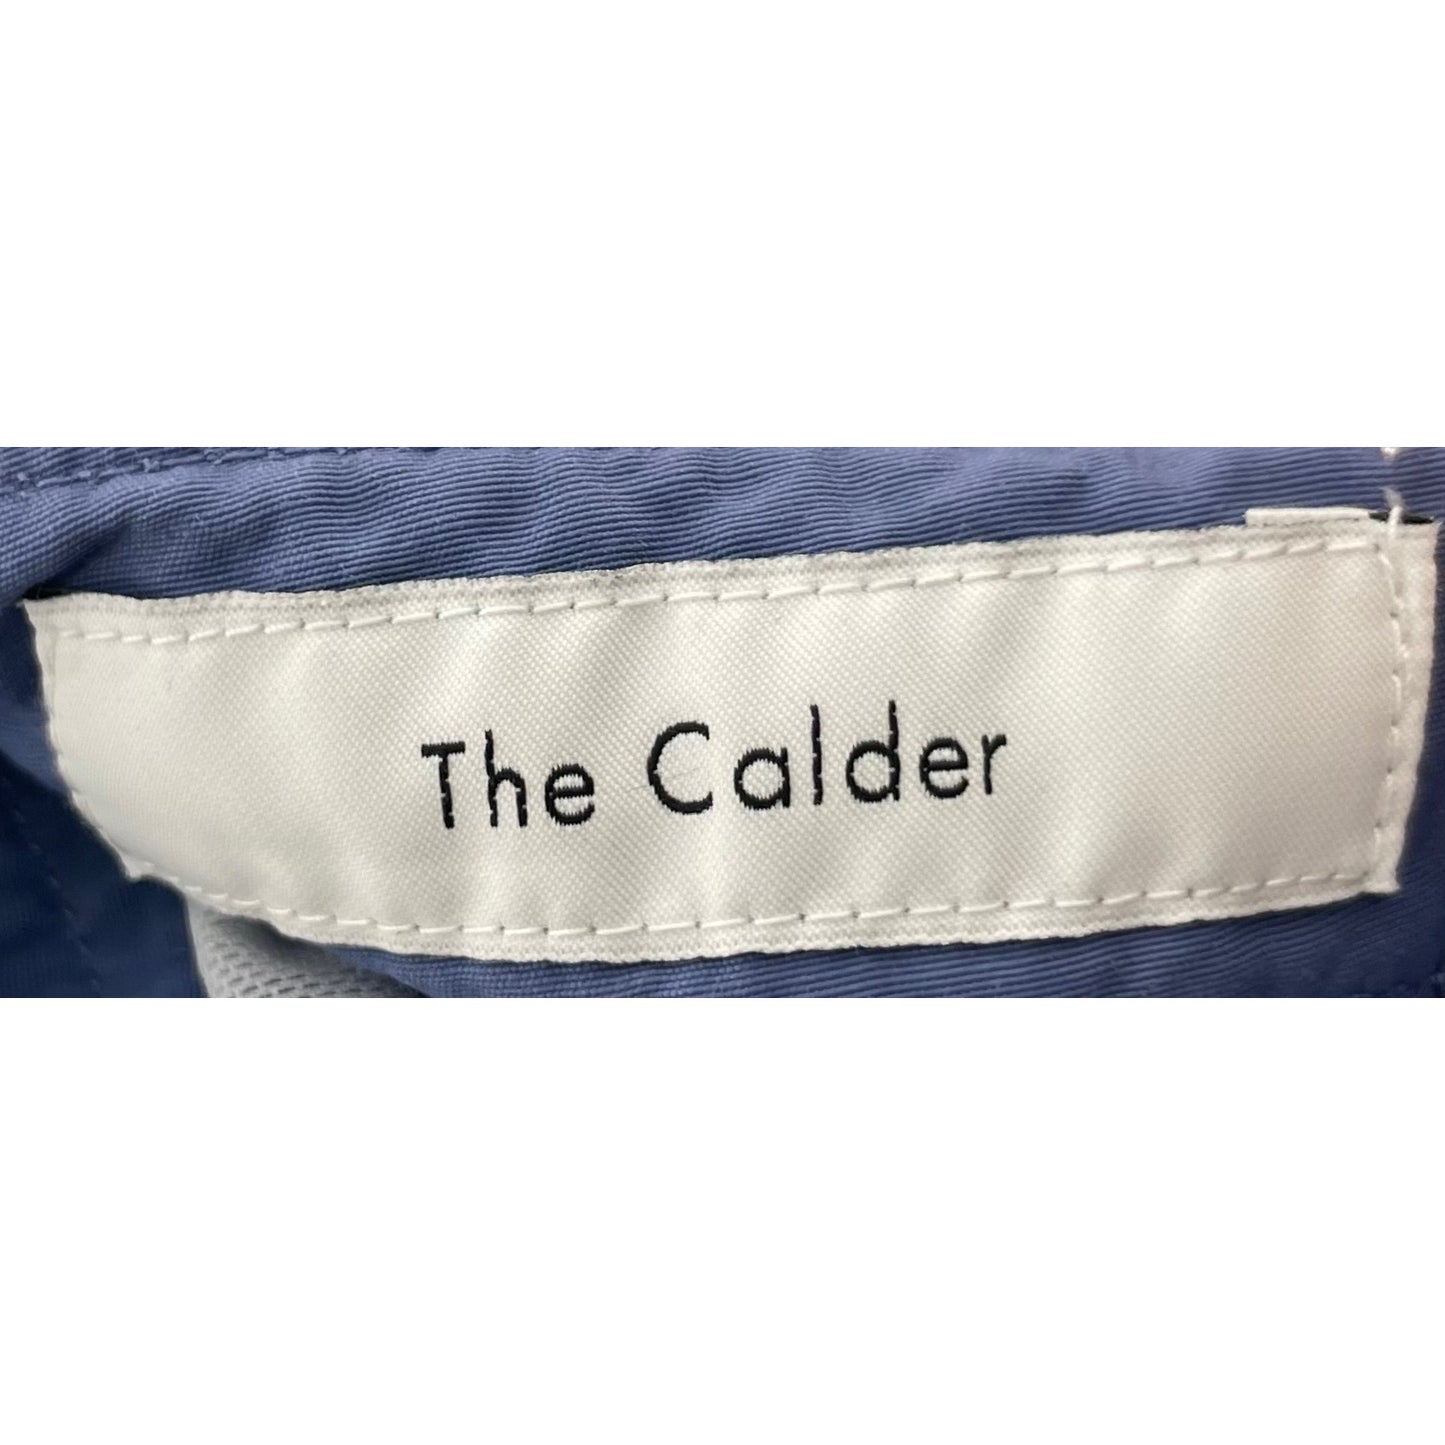 Onia Men's Size 32 (XS) The Calder Bluish Periwinkle Swim Shorts